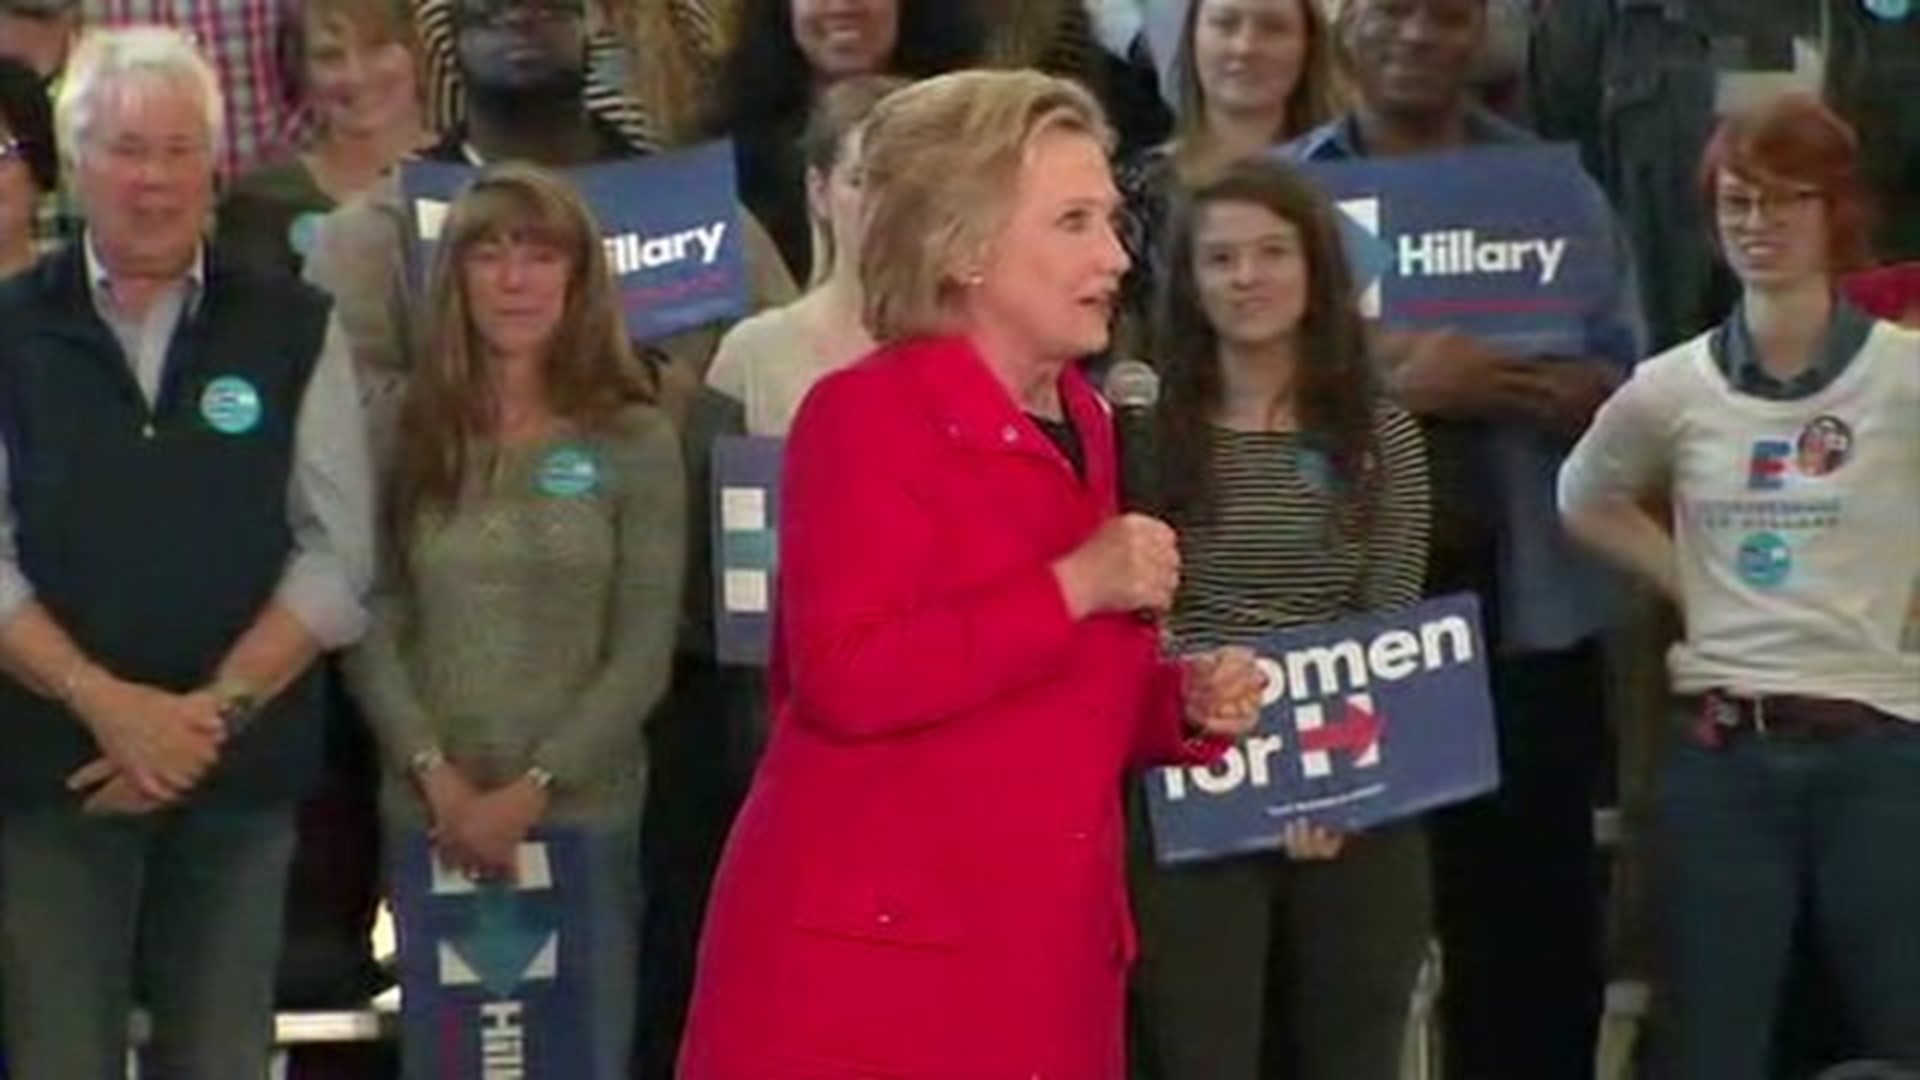 Hillary Clinton rally